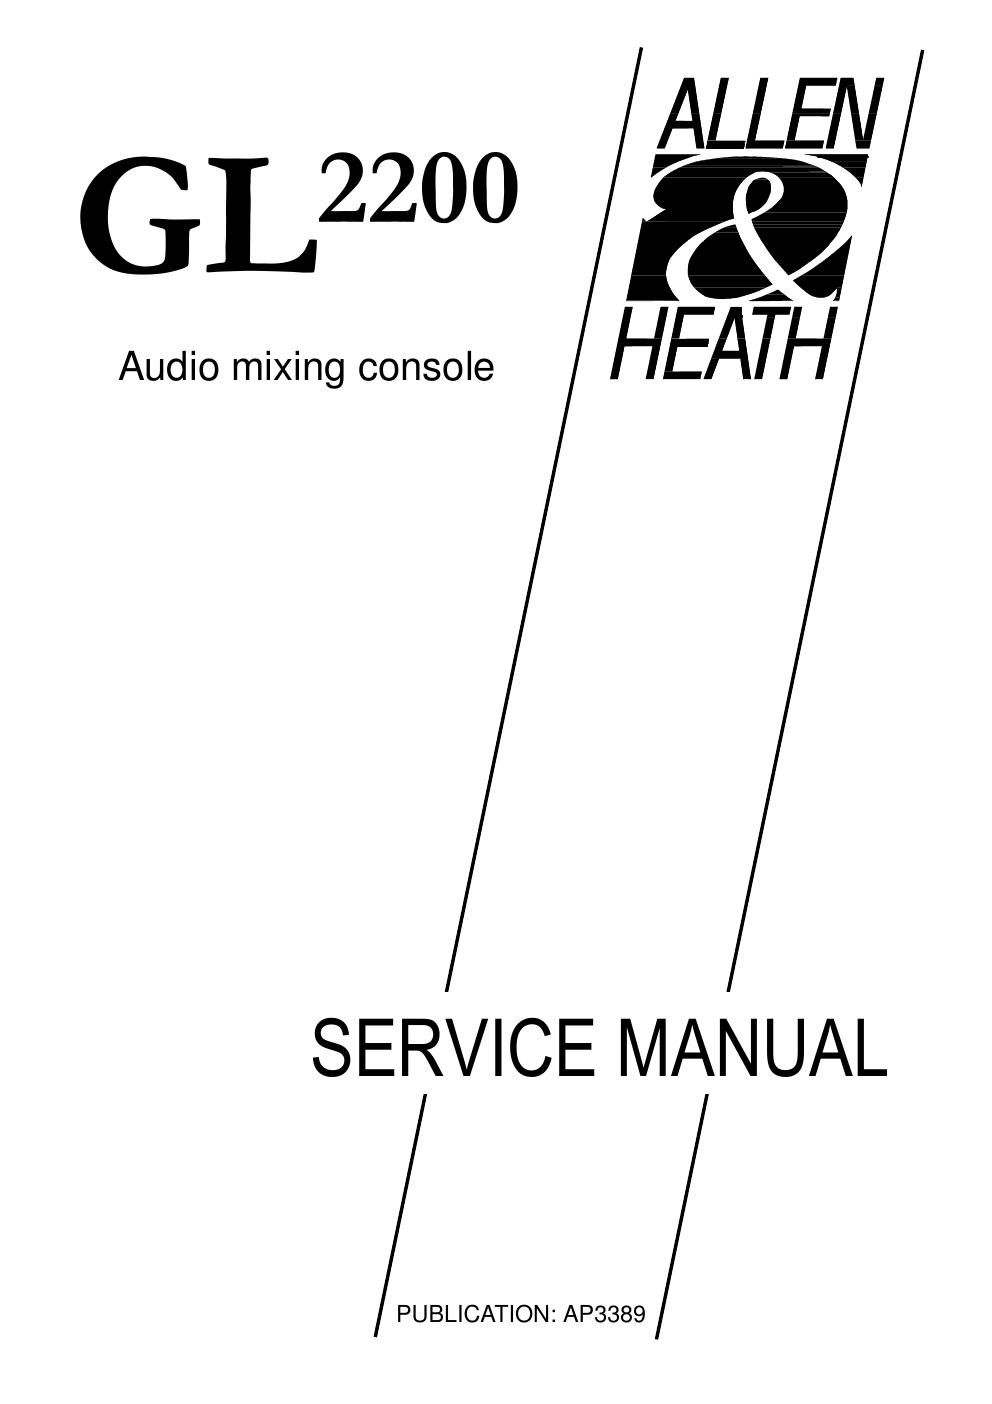 allen heath gl 2200 service manual